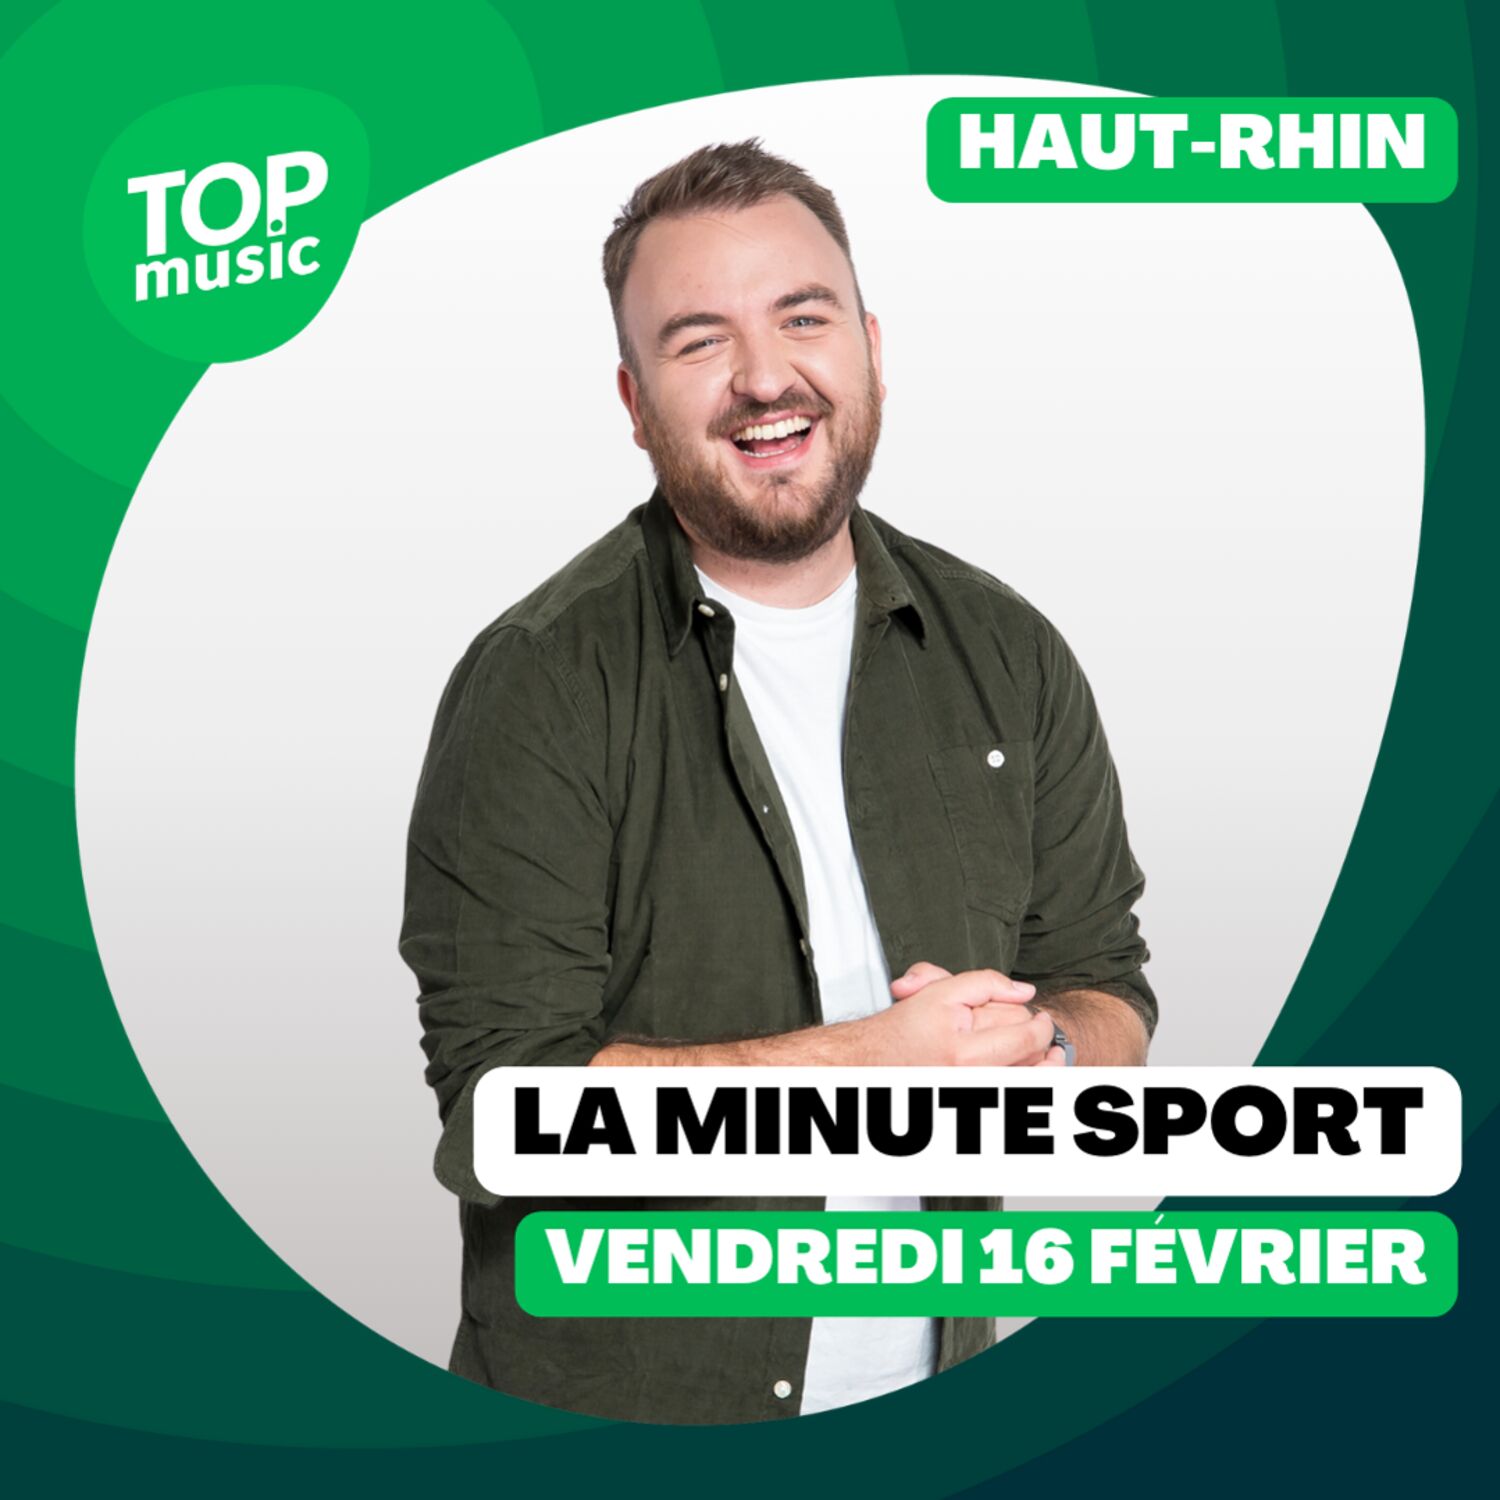 La Minute sport du Haut-Rhin - vendredi 16 février